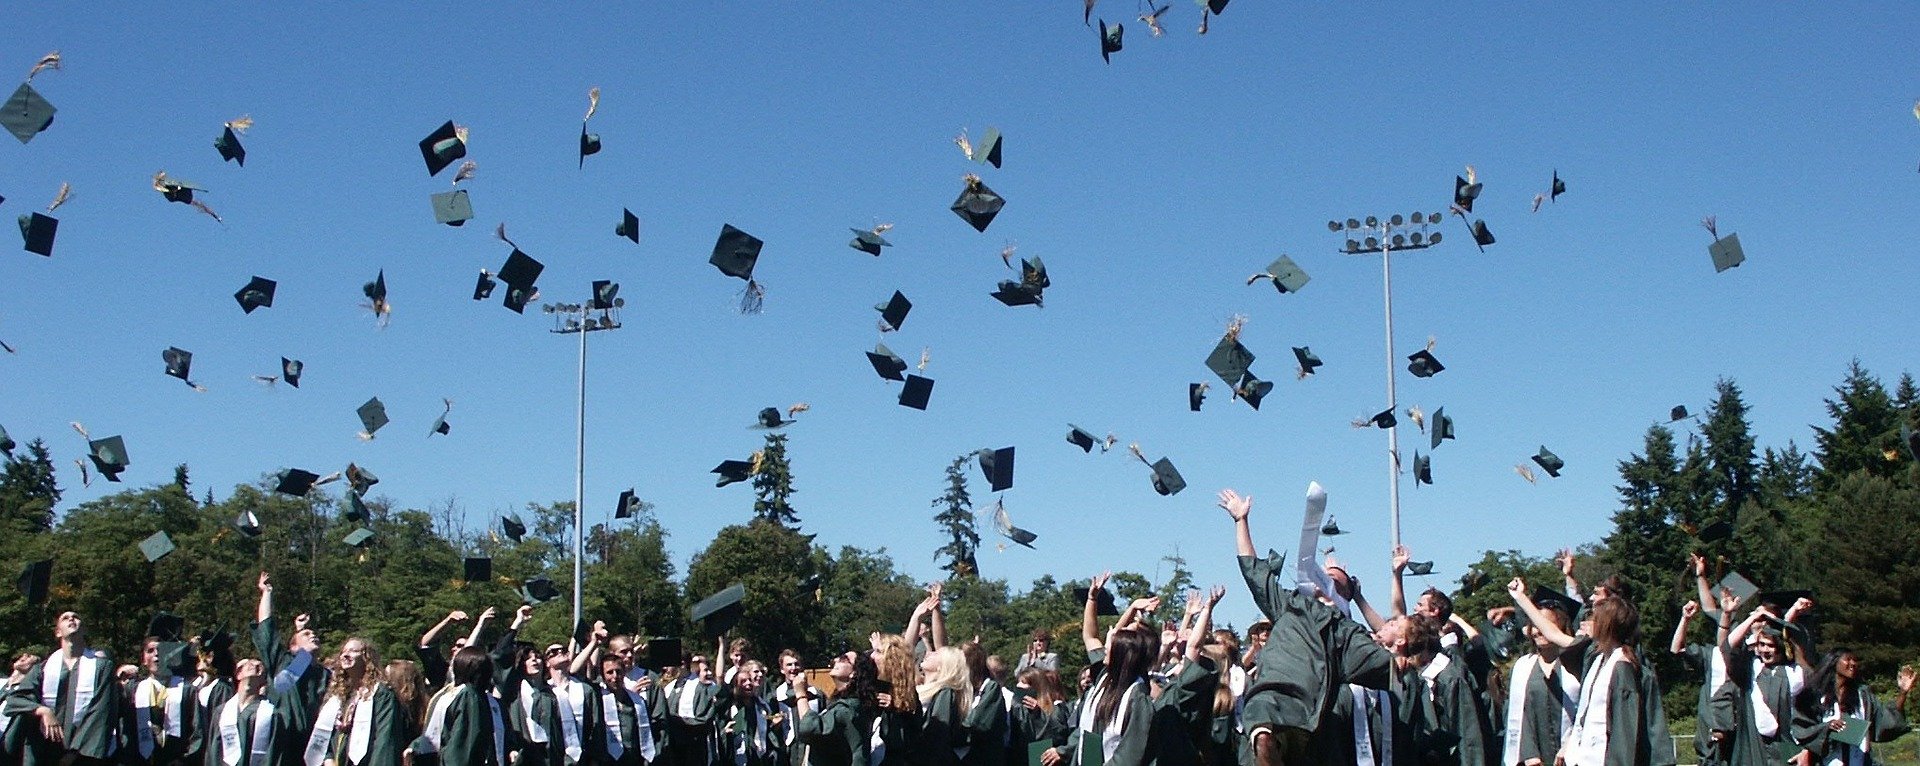 A graduating class celebrating their achievement. | Source: Pixabay.